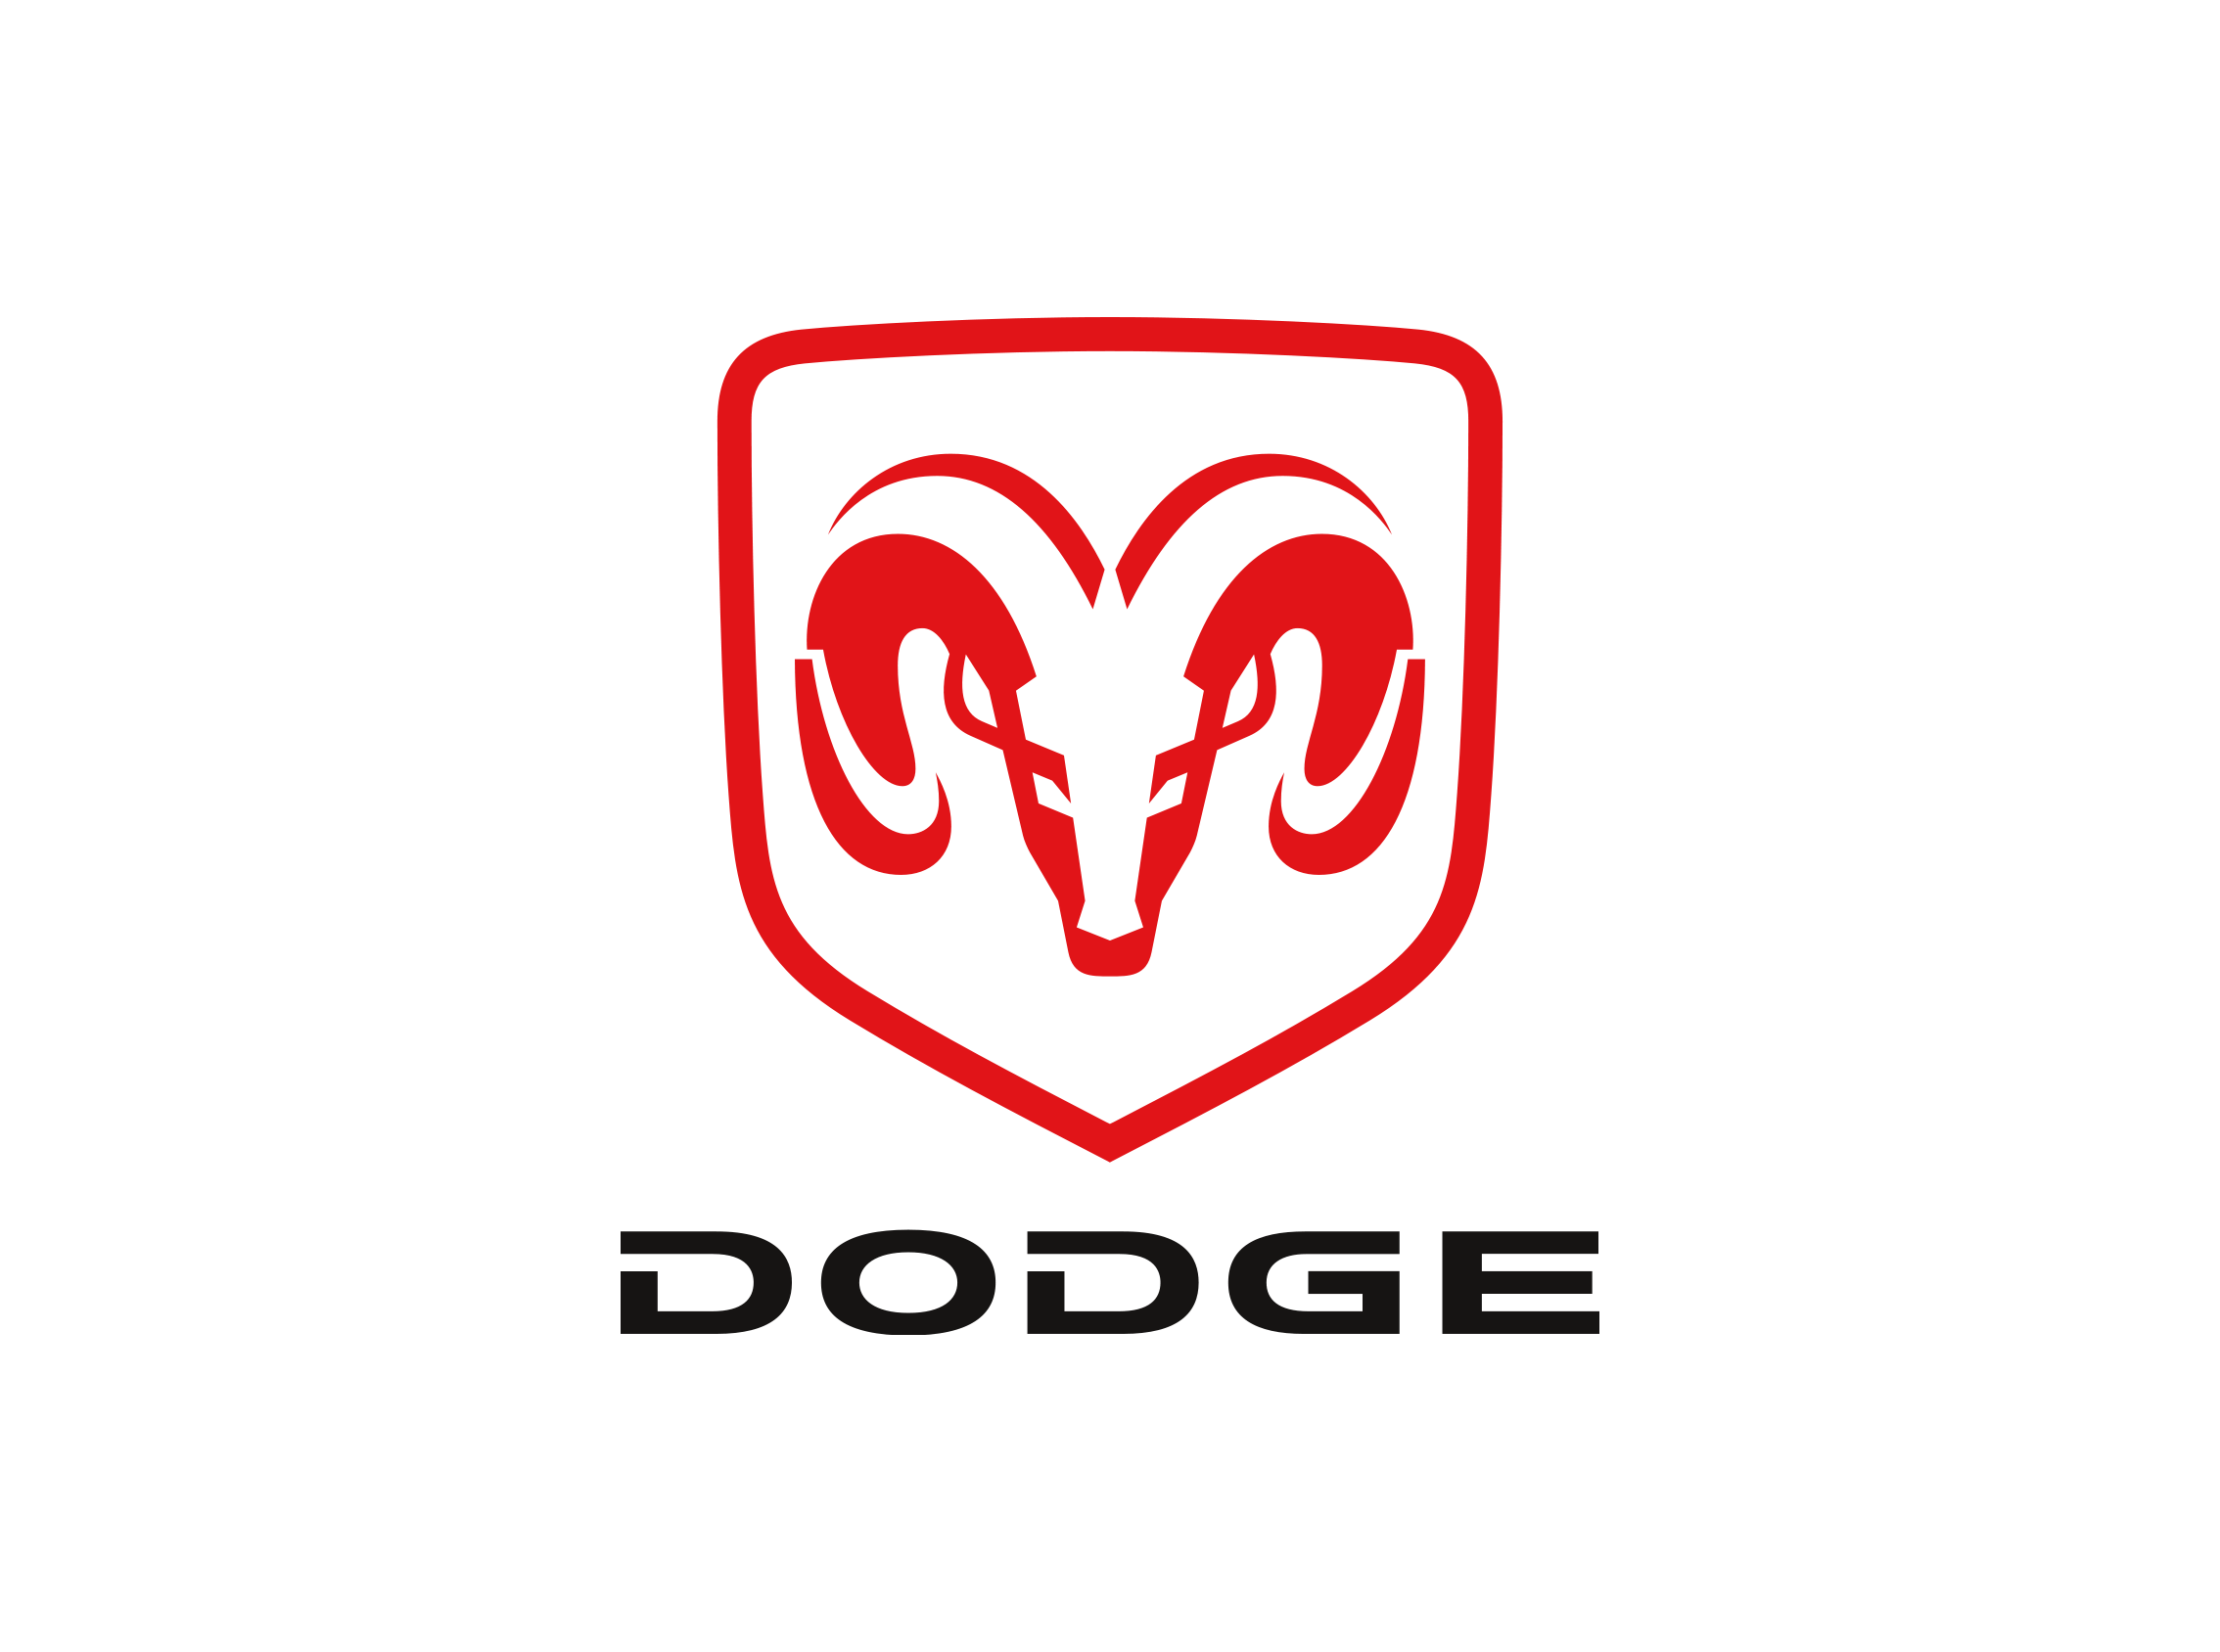 Dodge Truck Logo - Dodge Truck Logo. About of logos